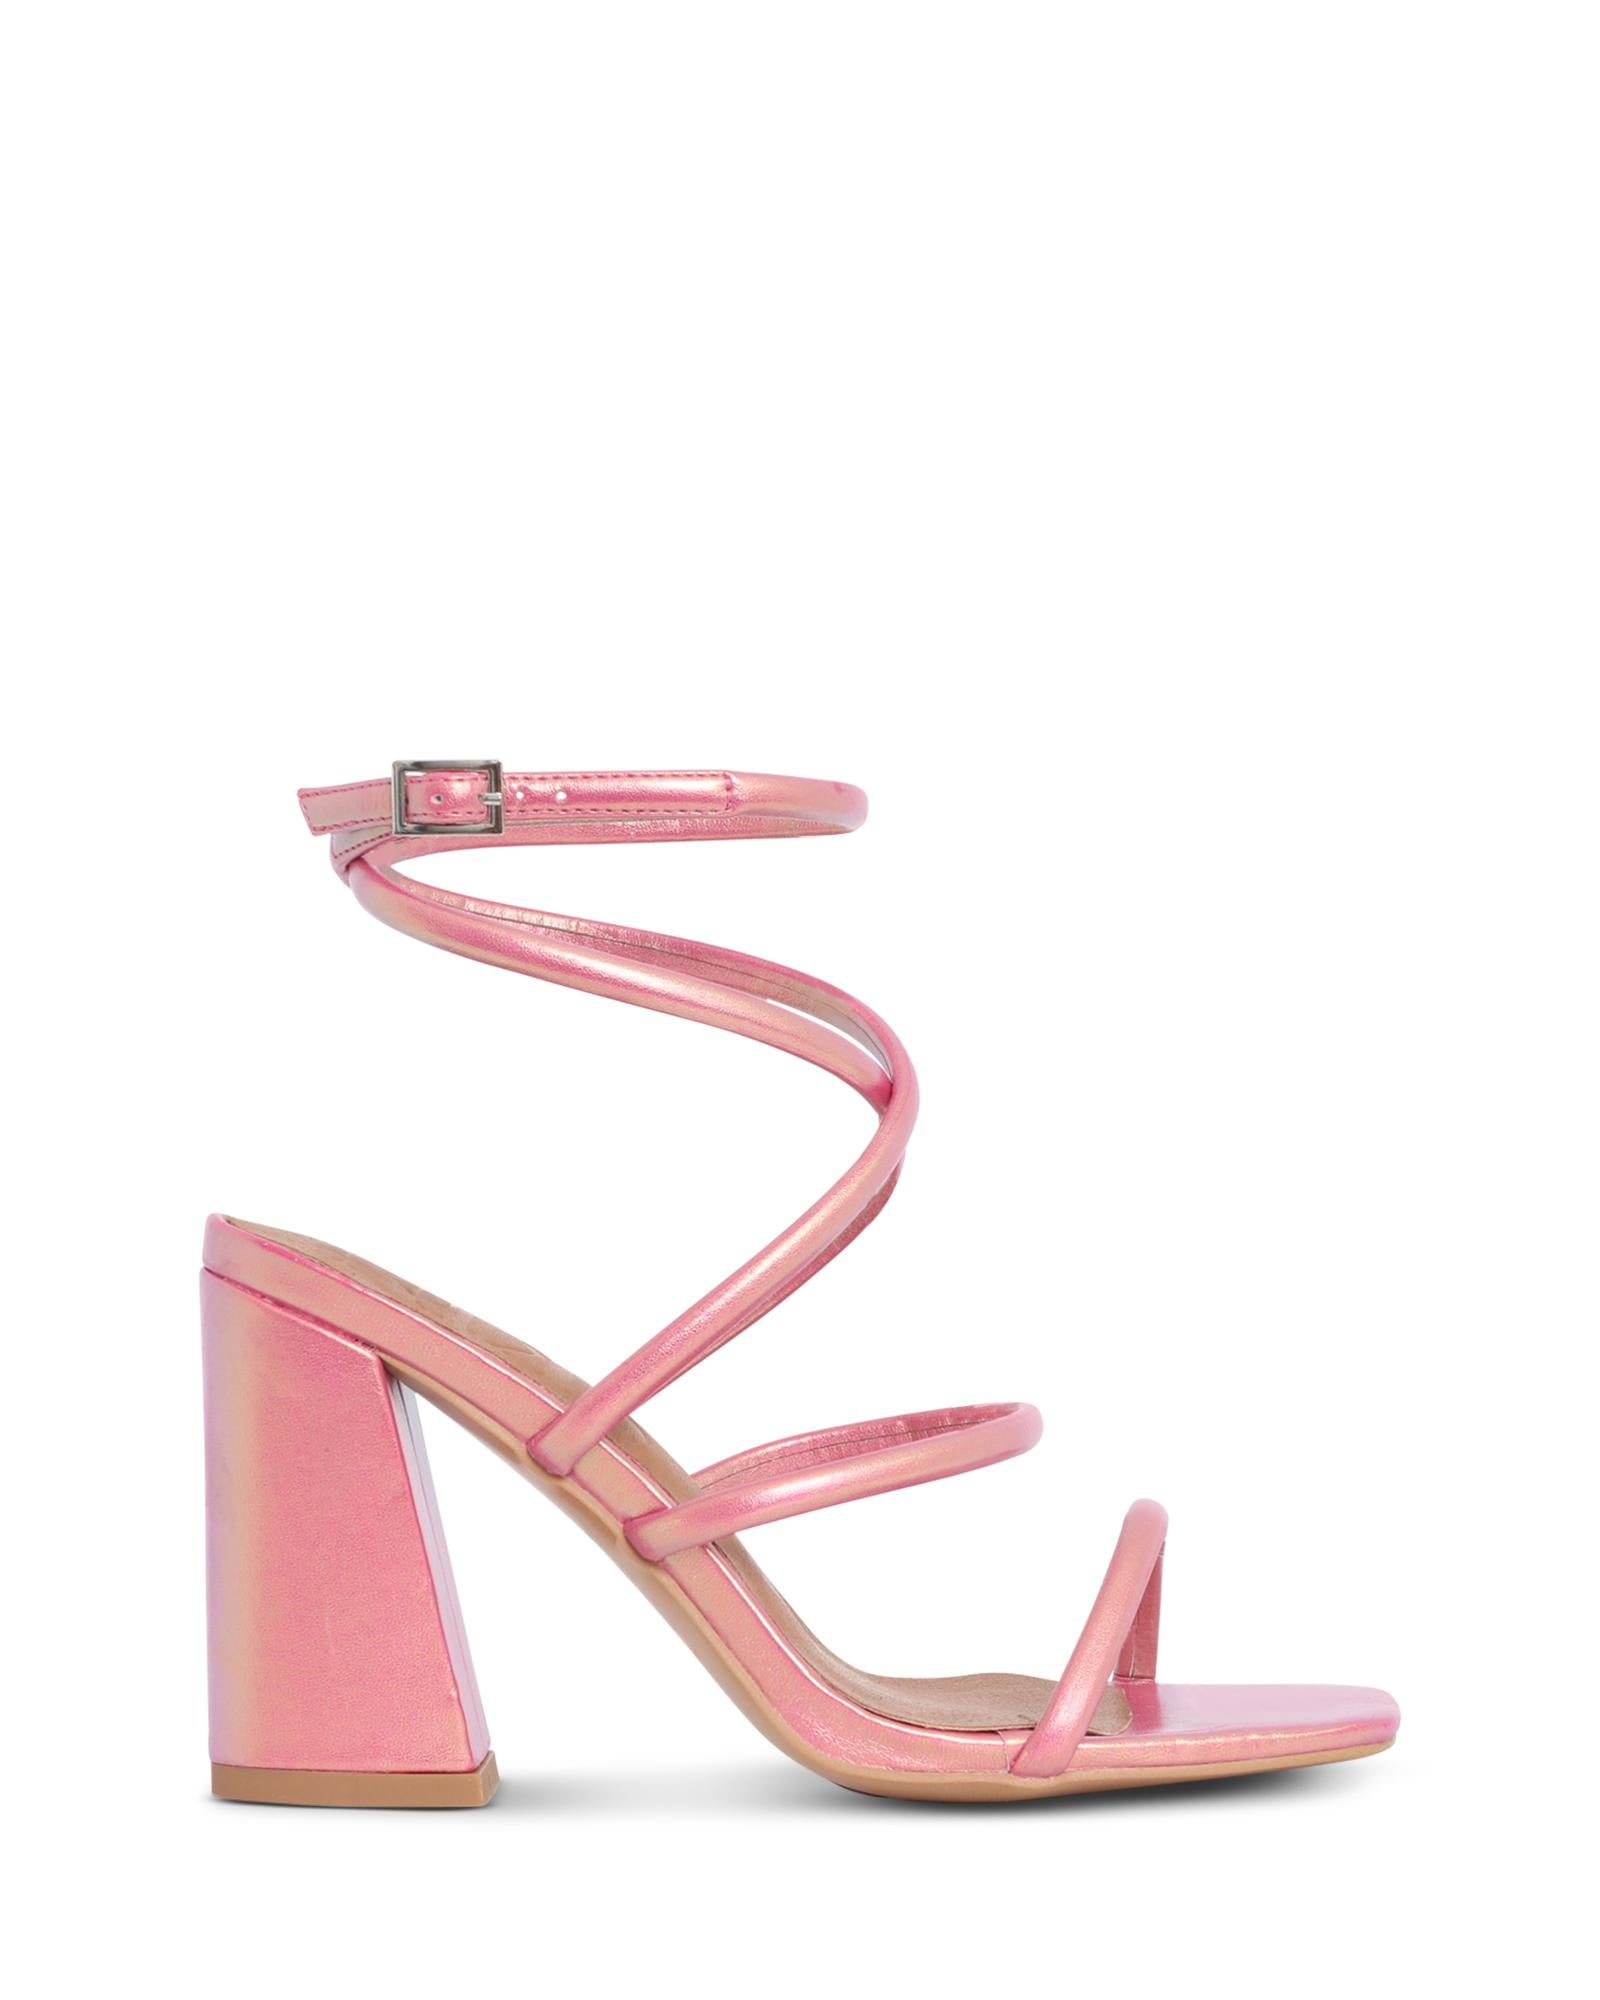 Seville Pink Metallic 9.5cm Heel